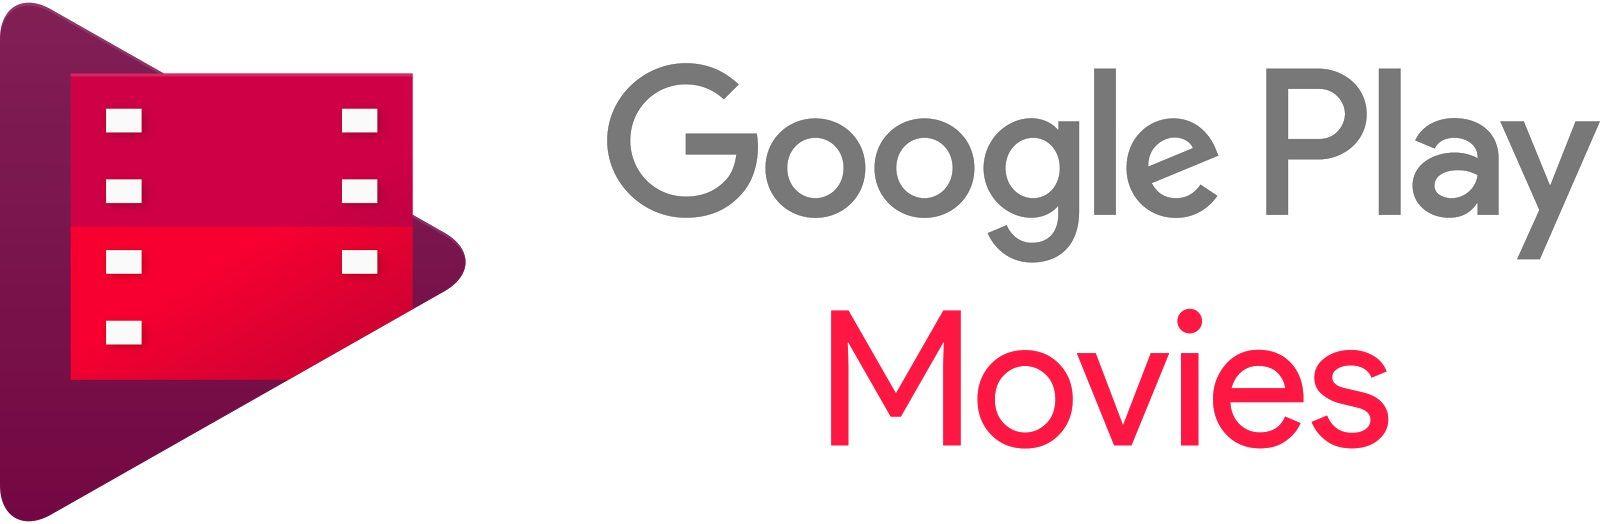 Google Movies Logo - Select Google Play Accounts: One Digital Movie Rental - Slickdeals.net